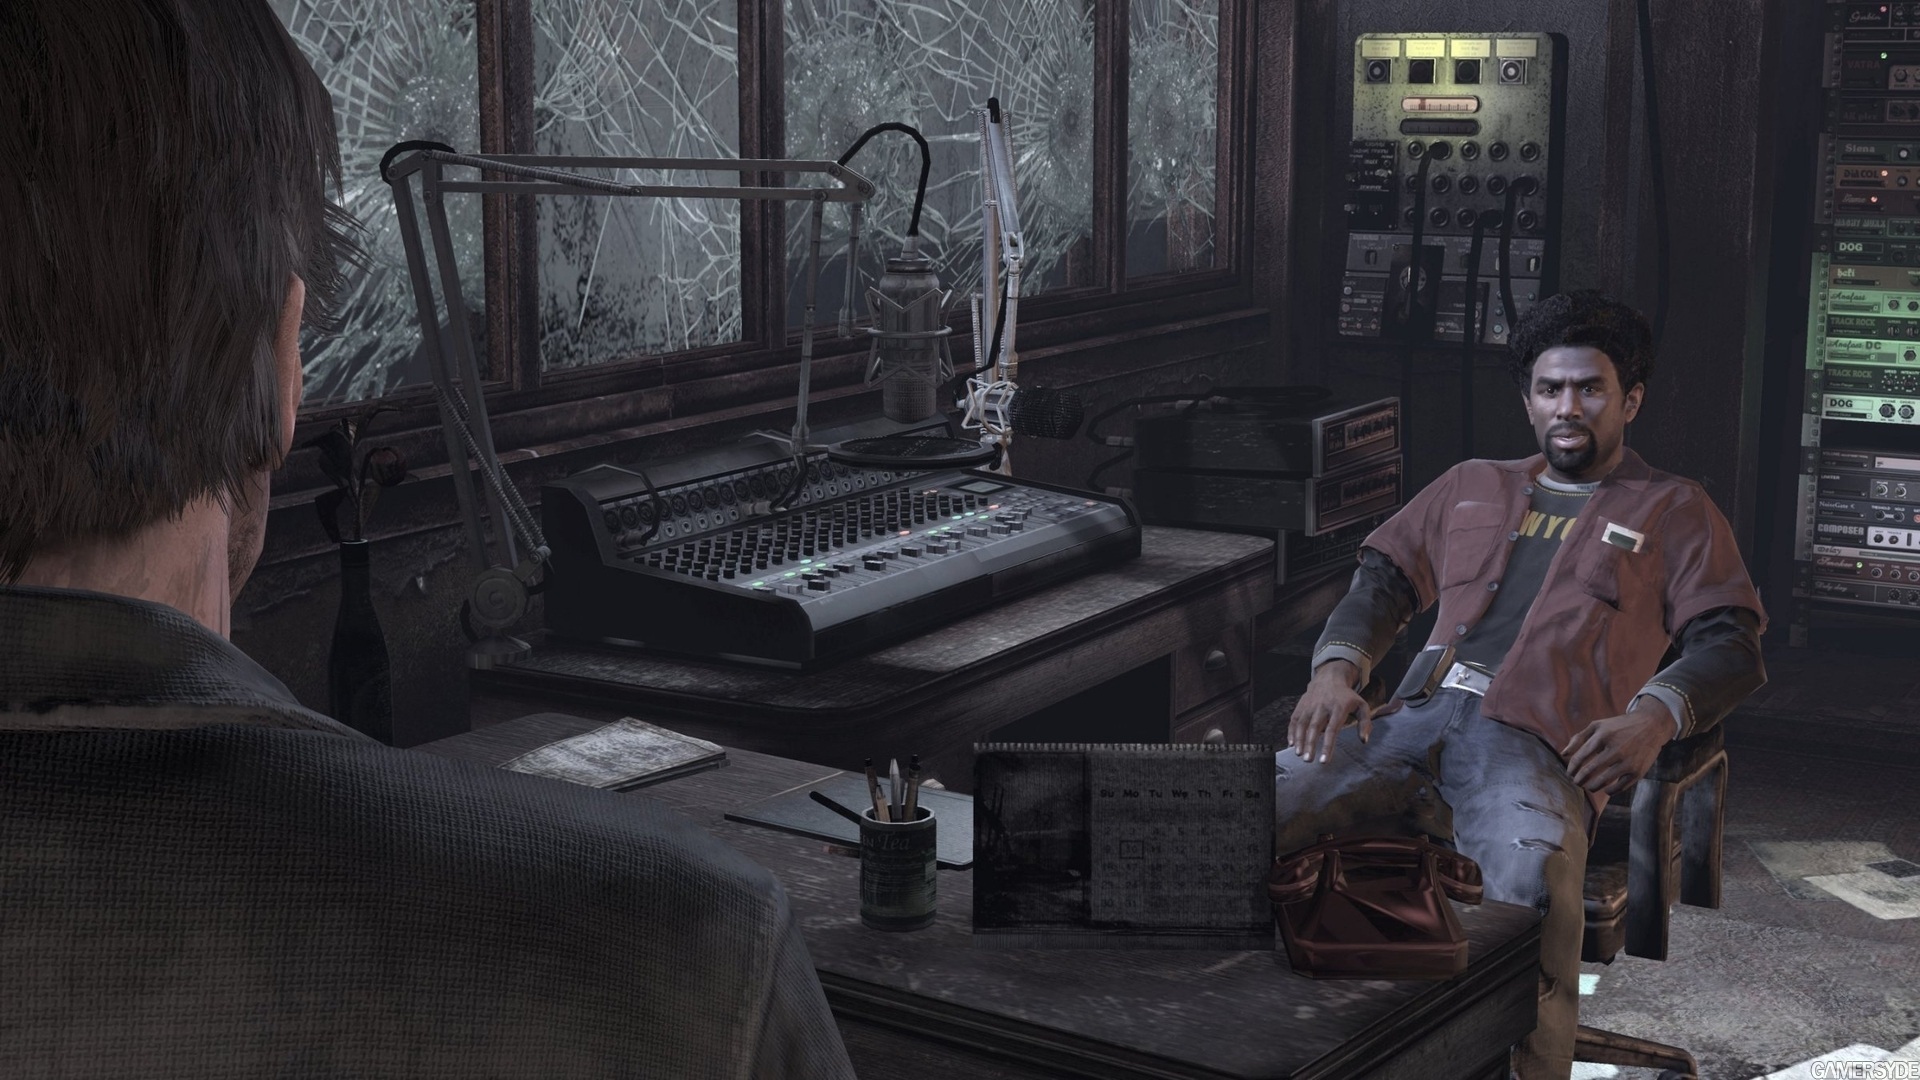 Silent Hill: Downpour Charakter postv zostal a trestuhodne nerozvinut.